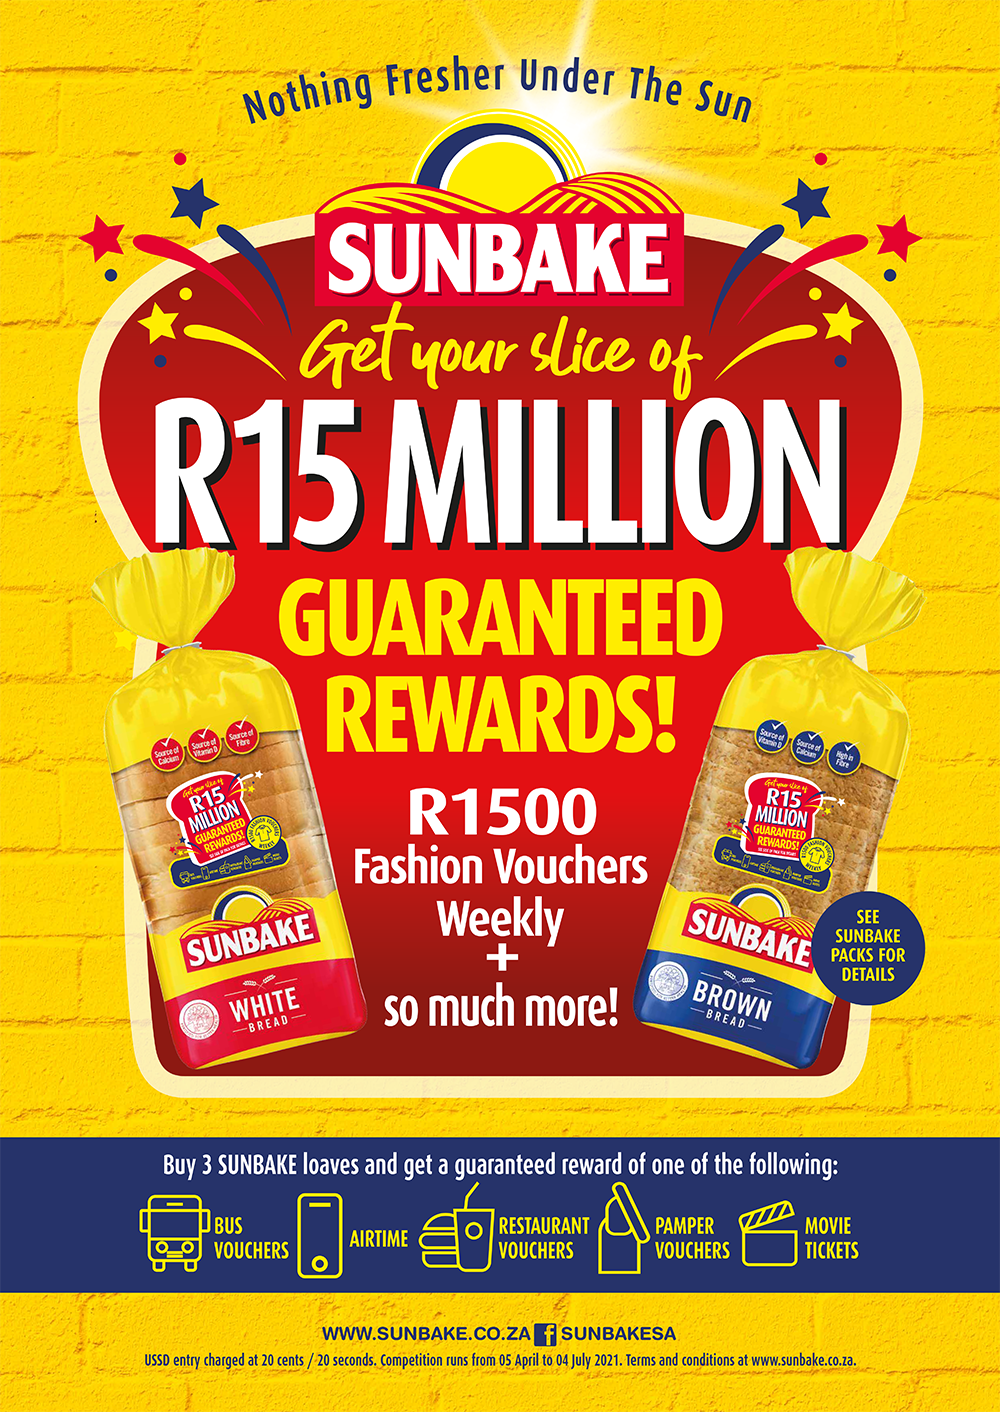 Sunbake get your slice of R 15 million guaranteed rewards!